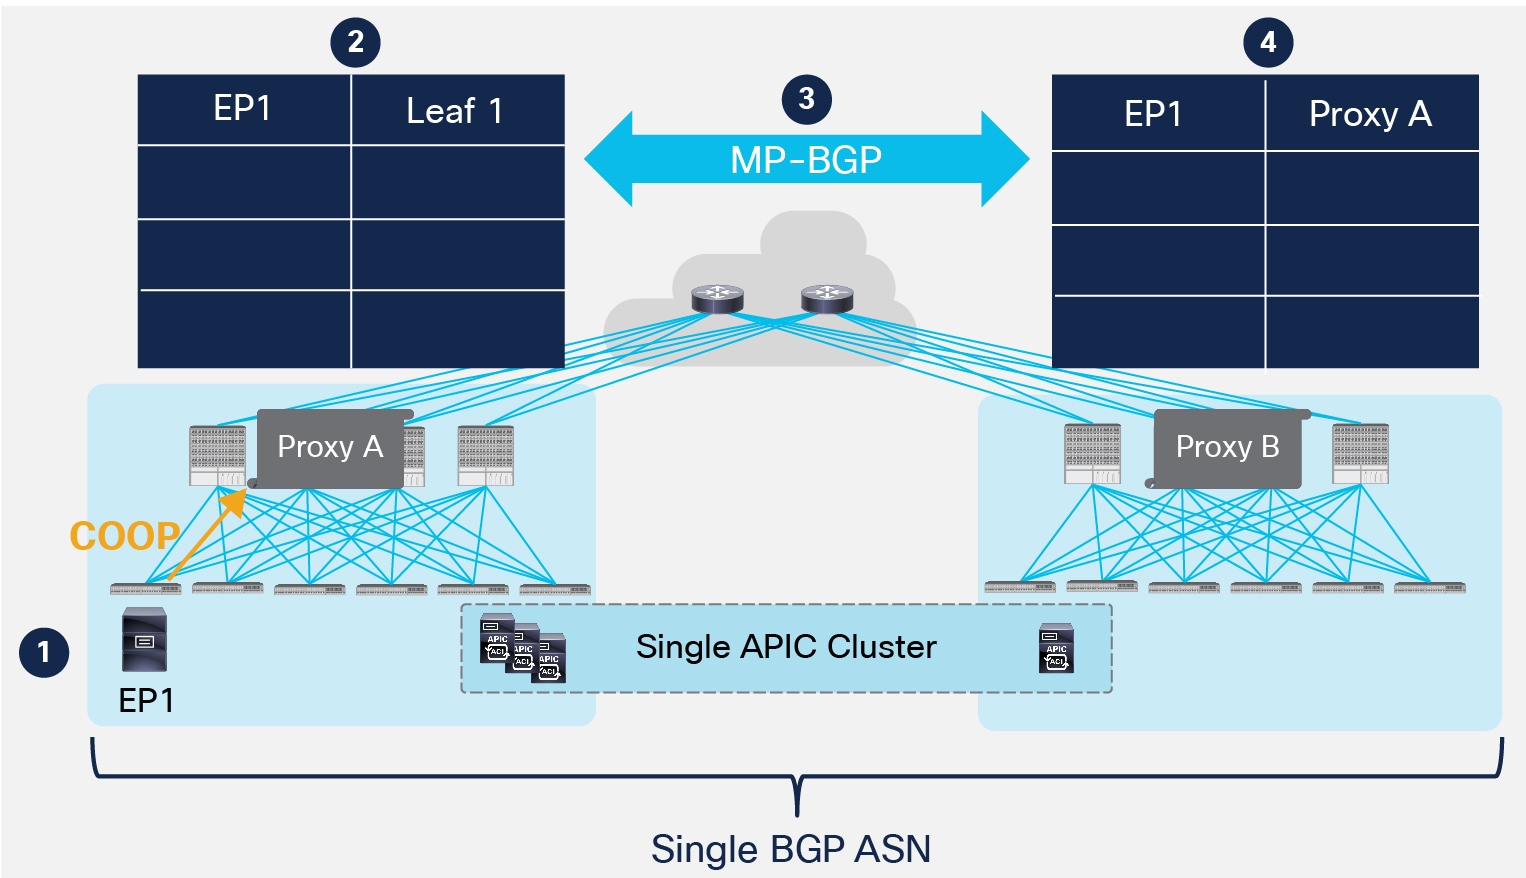 MP-BGP Control Plane across Pods